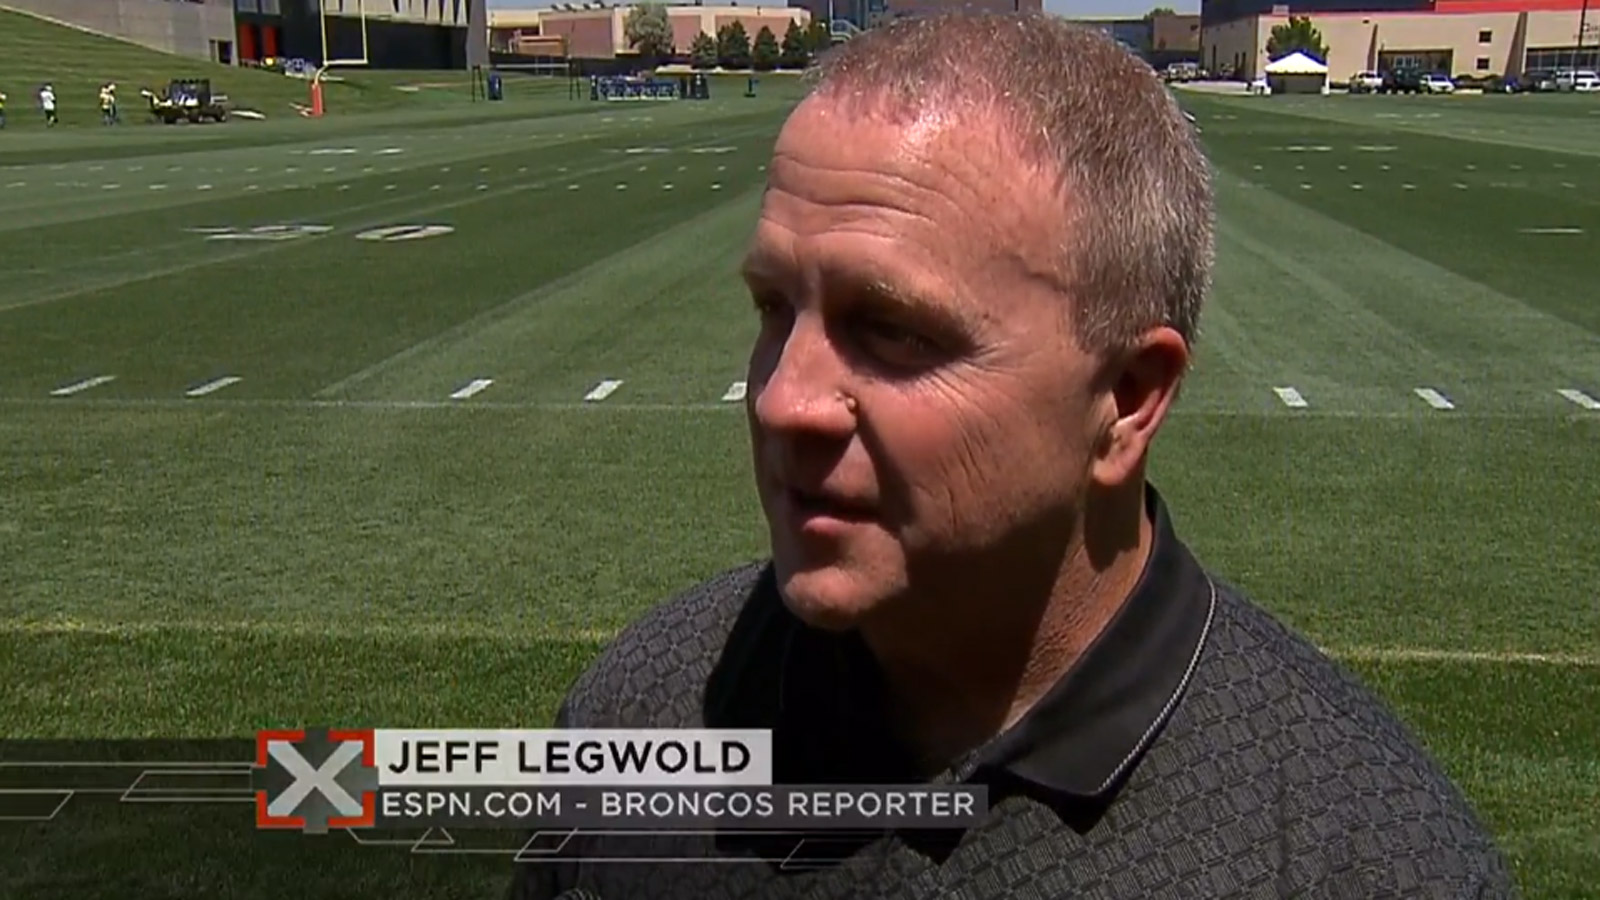 Jeff Legwold